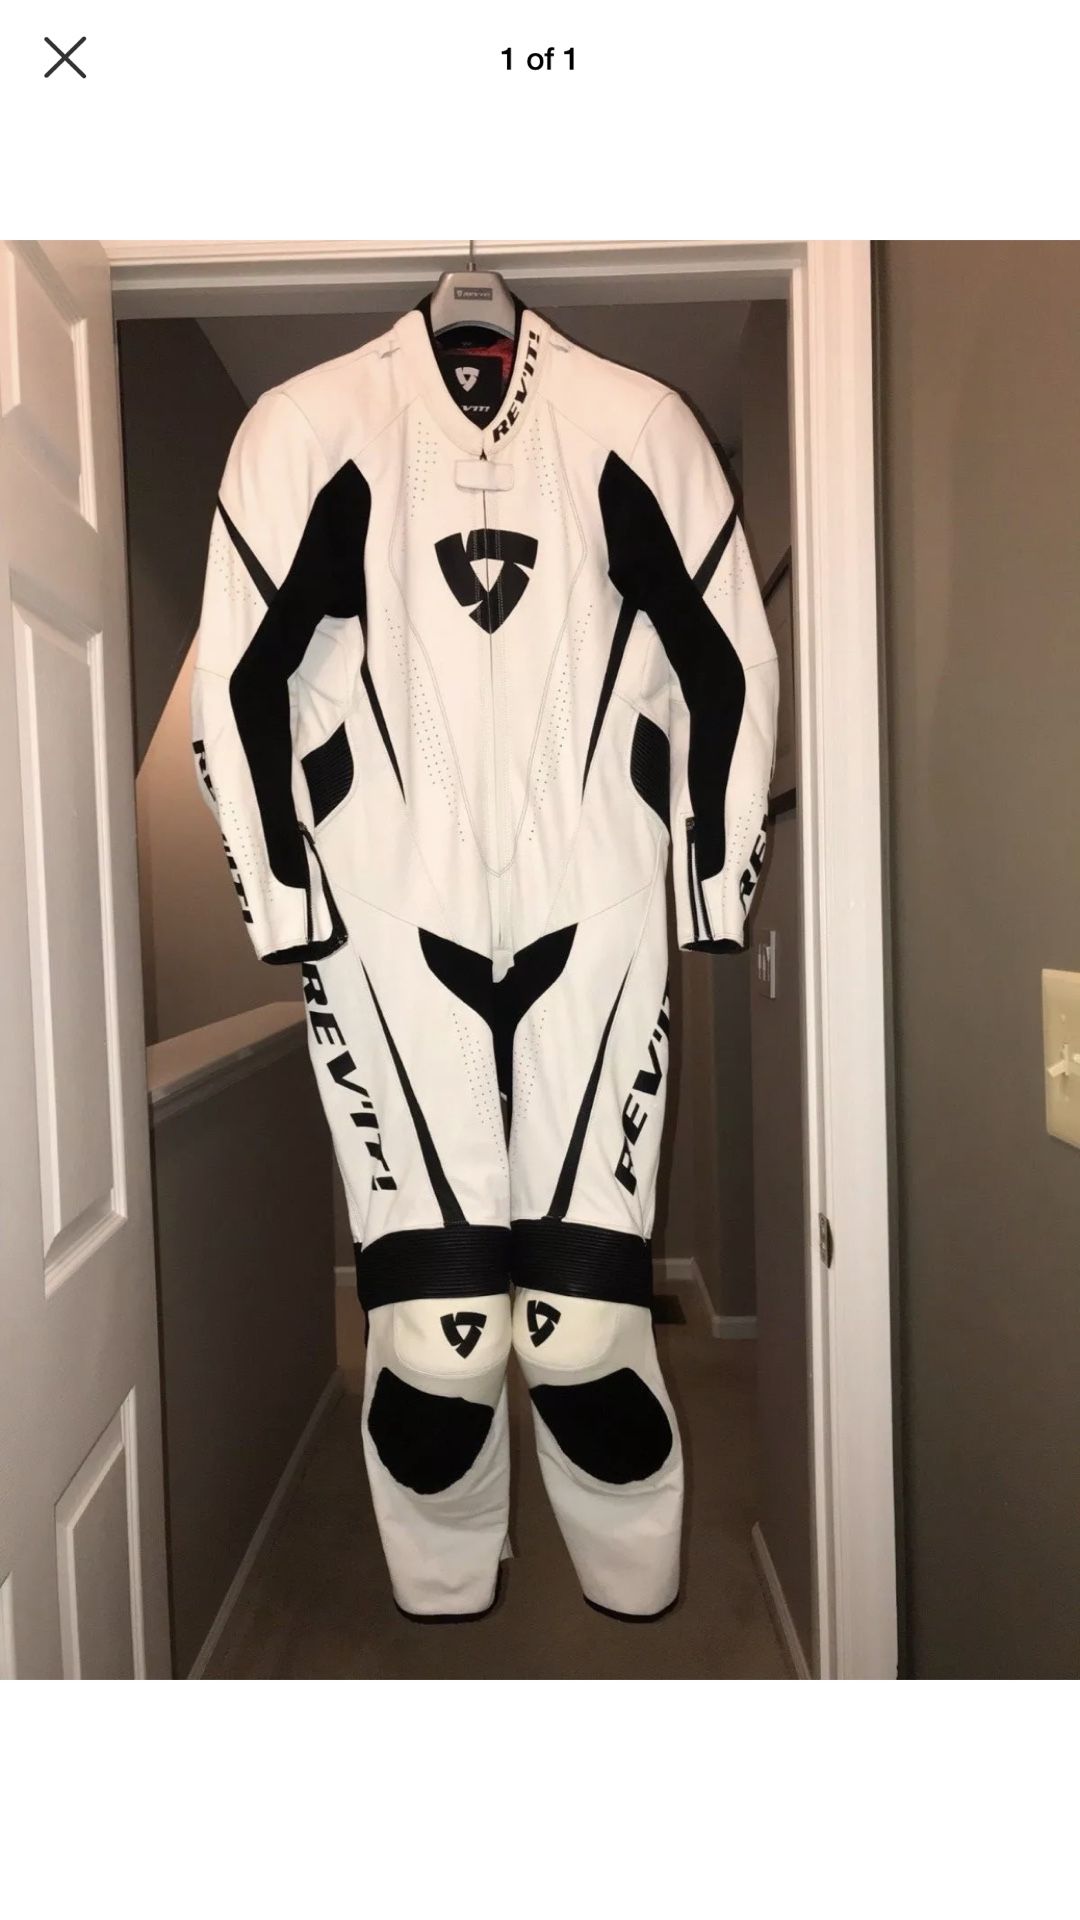 Rev’it “Bullit” One Piece Motorcycle Race Suit - White size 50